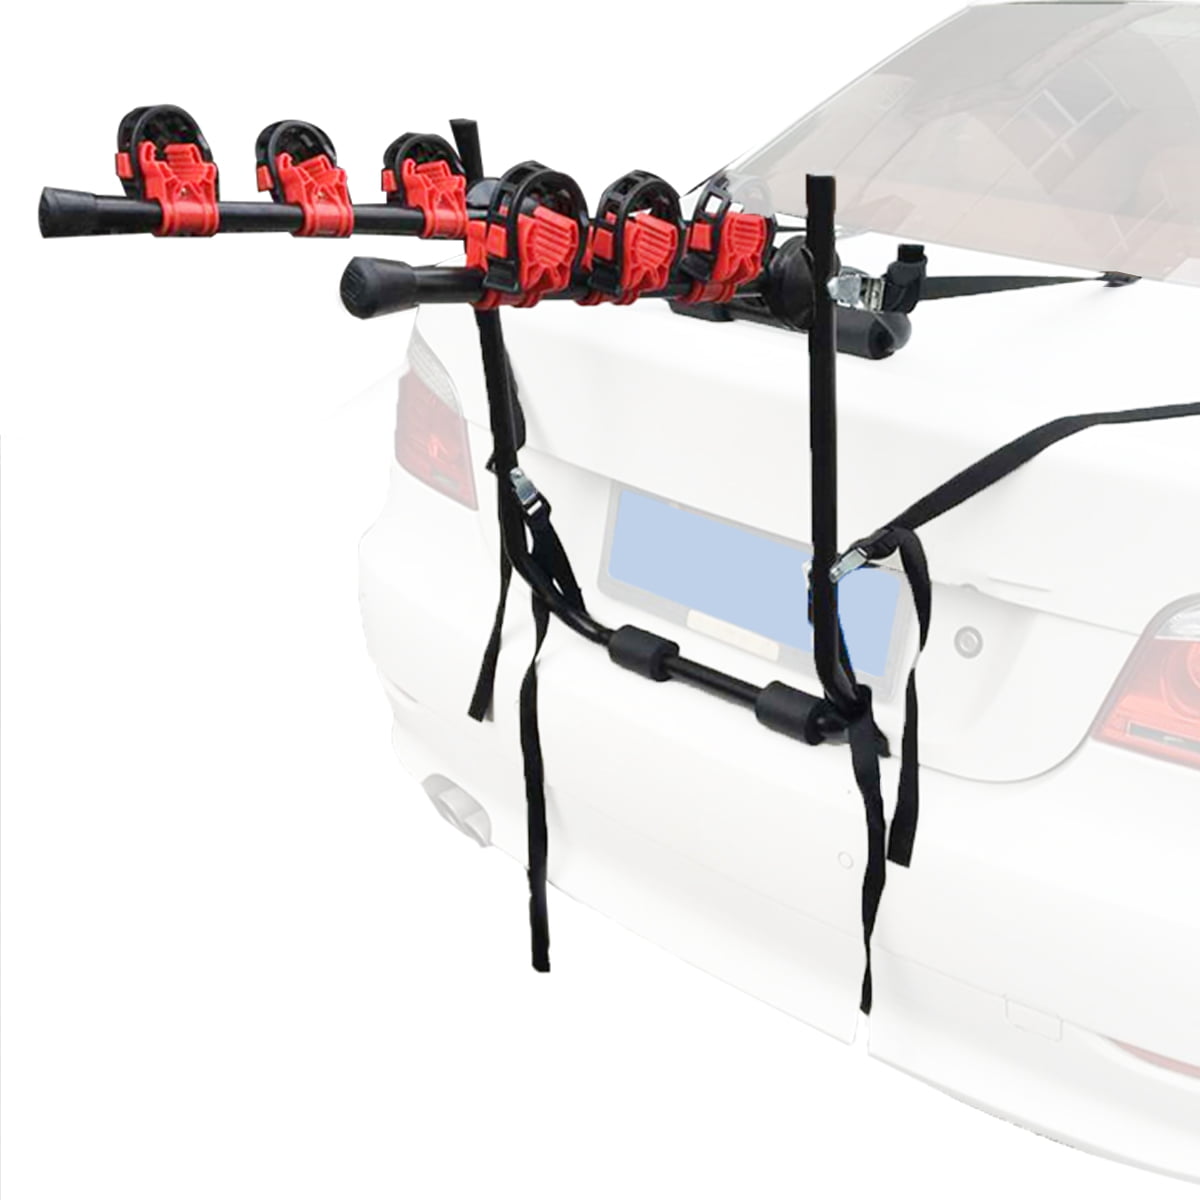 Details about   3-Bicycle Trunk Mount Bike Carrier Rack Hatchback Portable for SUV & Car Sport 